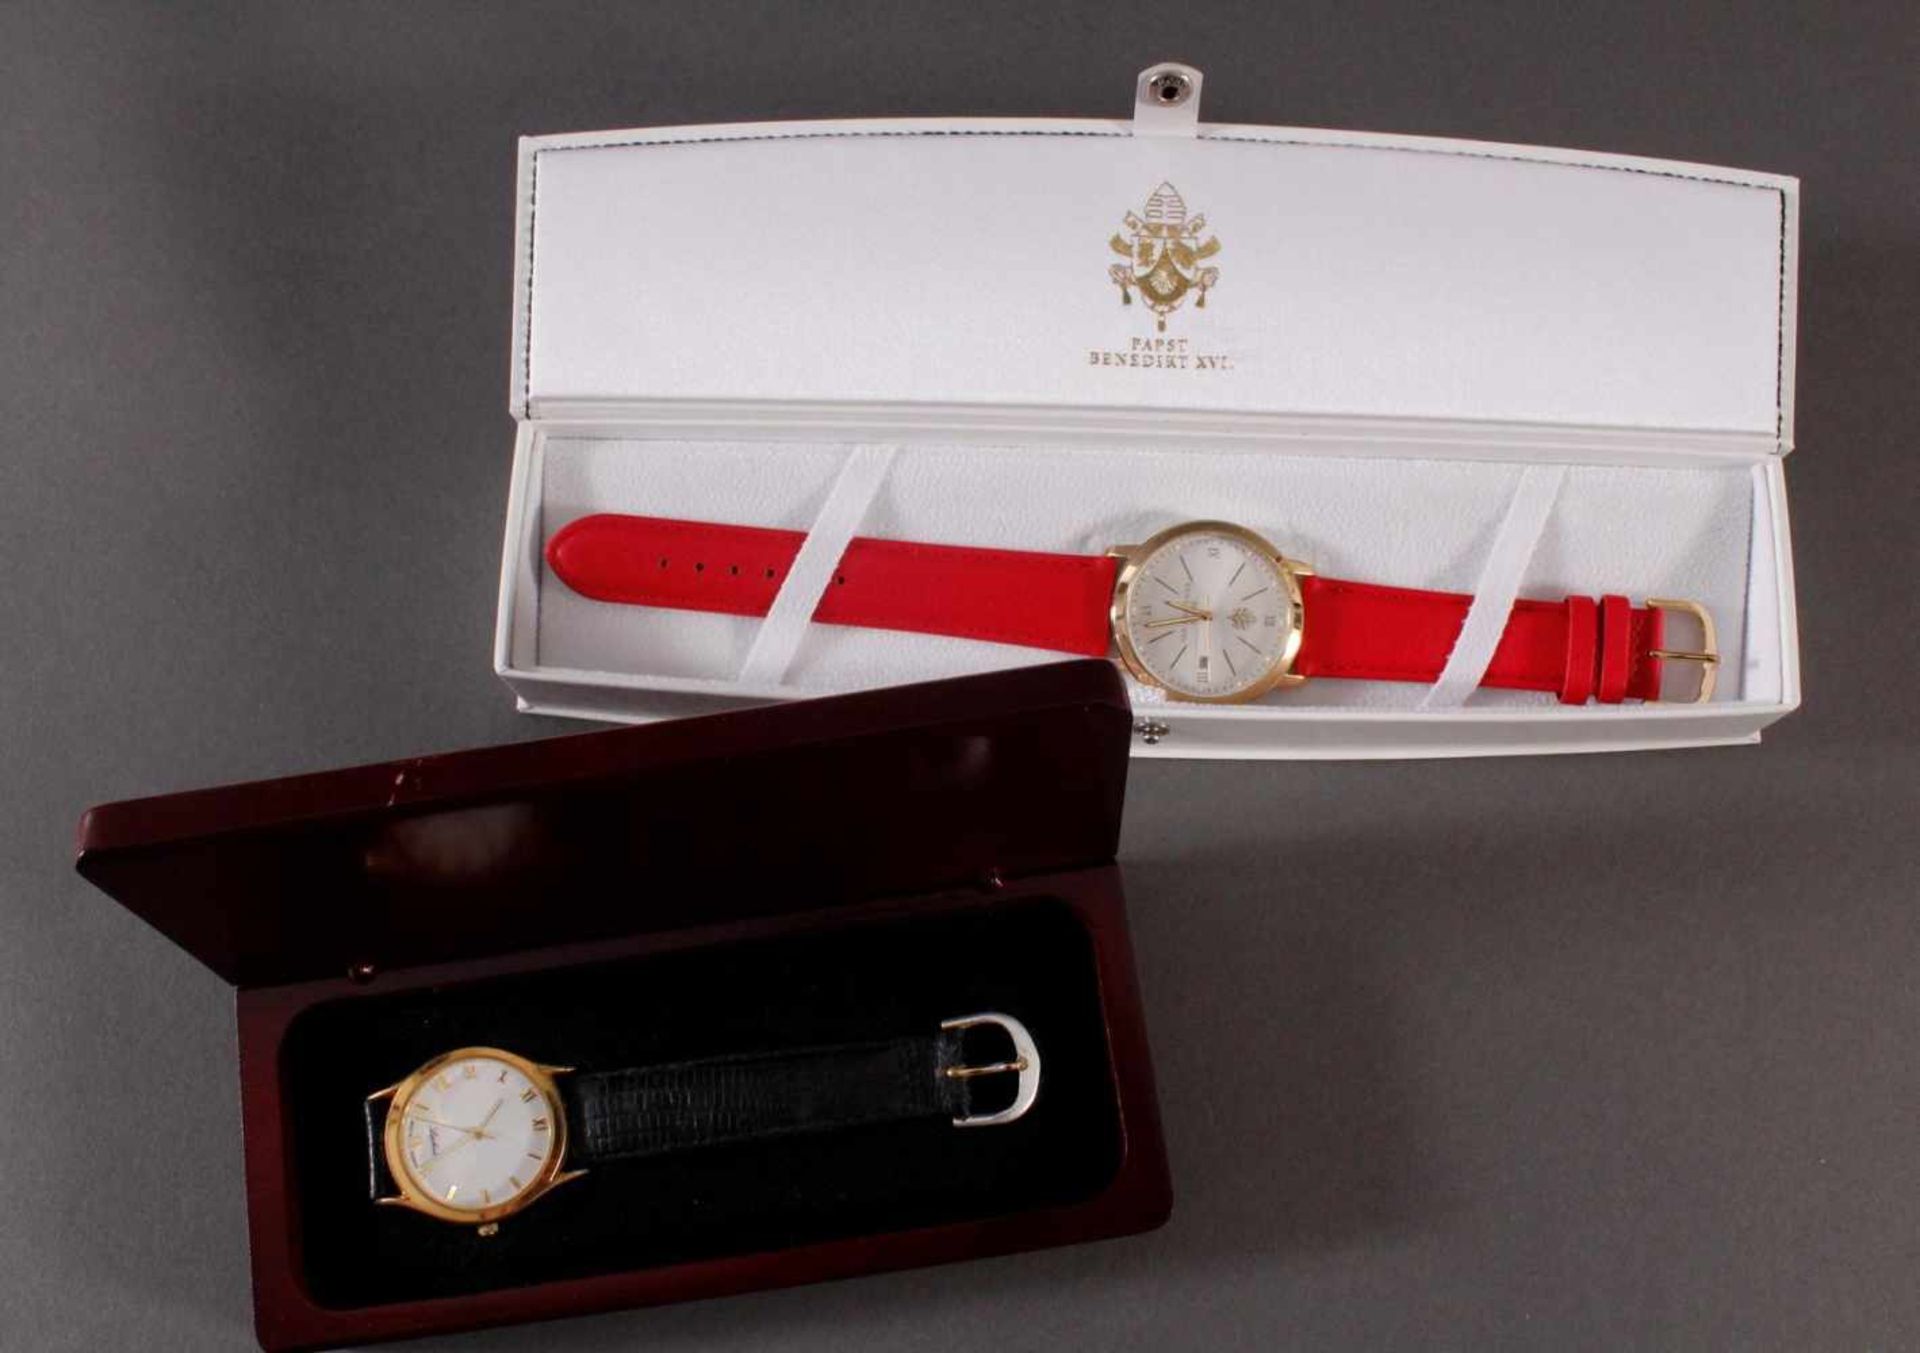 2 Armbanduhren1x Armbanduhr Papst Benedikt XVI. Limitiert auf 1000 Stück. in weißer Uhrenschachtel.